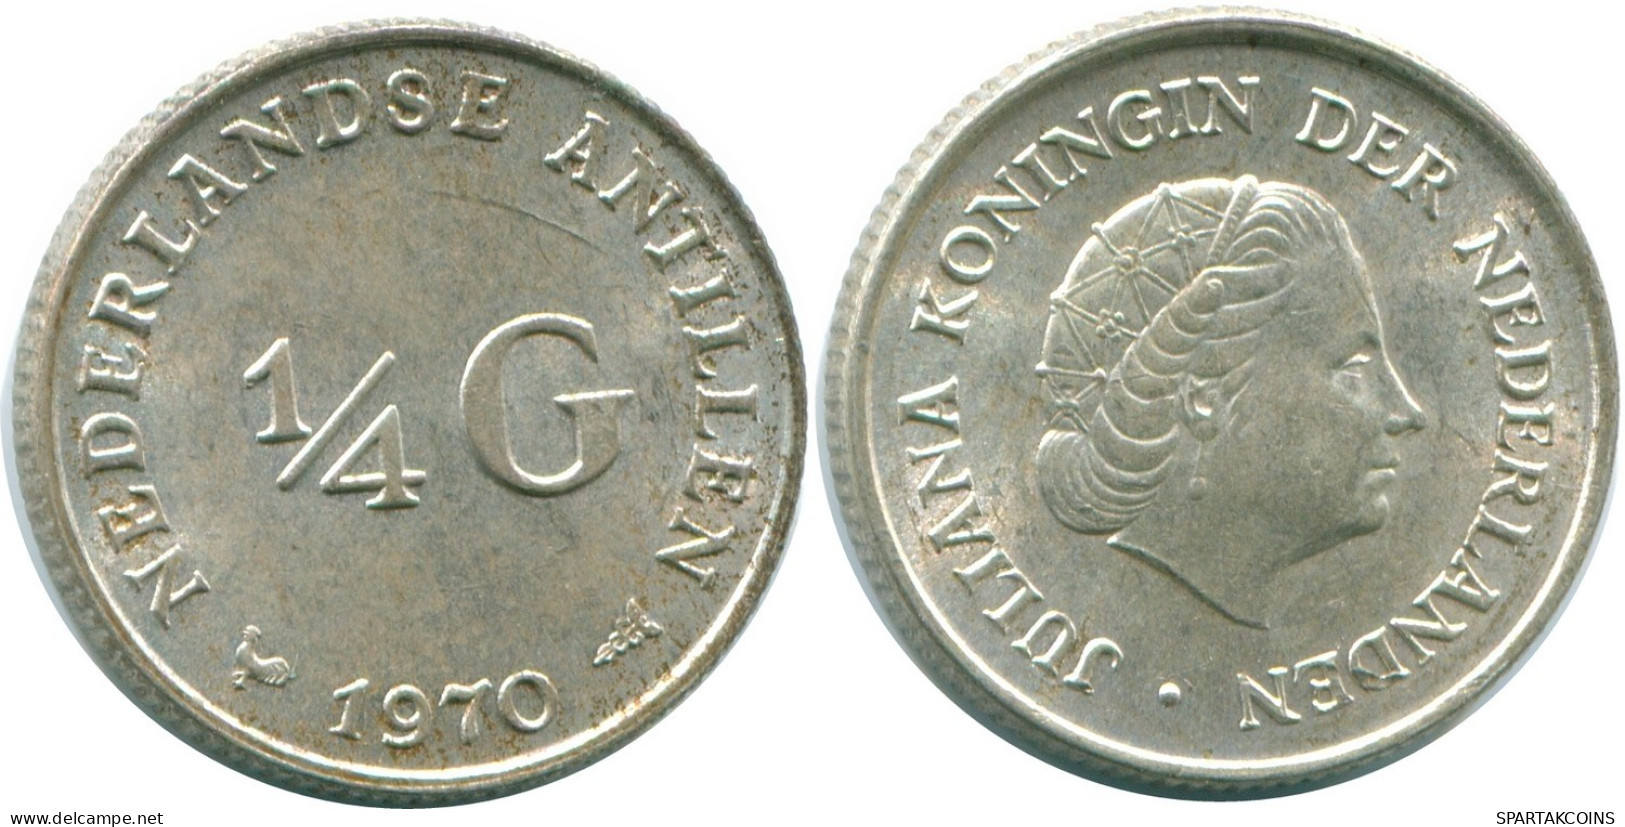 1/4 GULDEN 1970 NETHERLANDS ANTILLES SILVER Colonial Coin #NL11627.4.U.A - Nederlandse Antillen